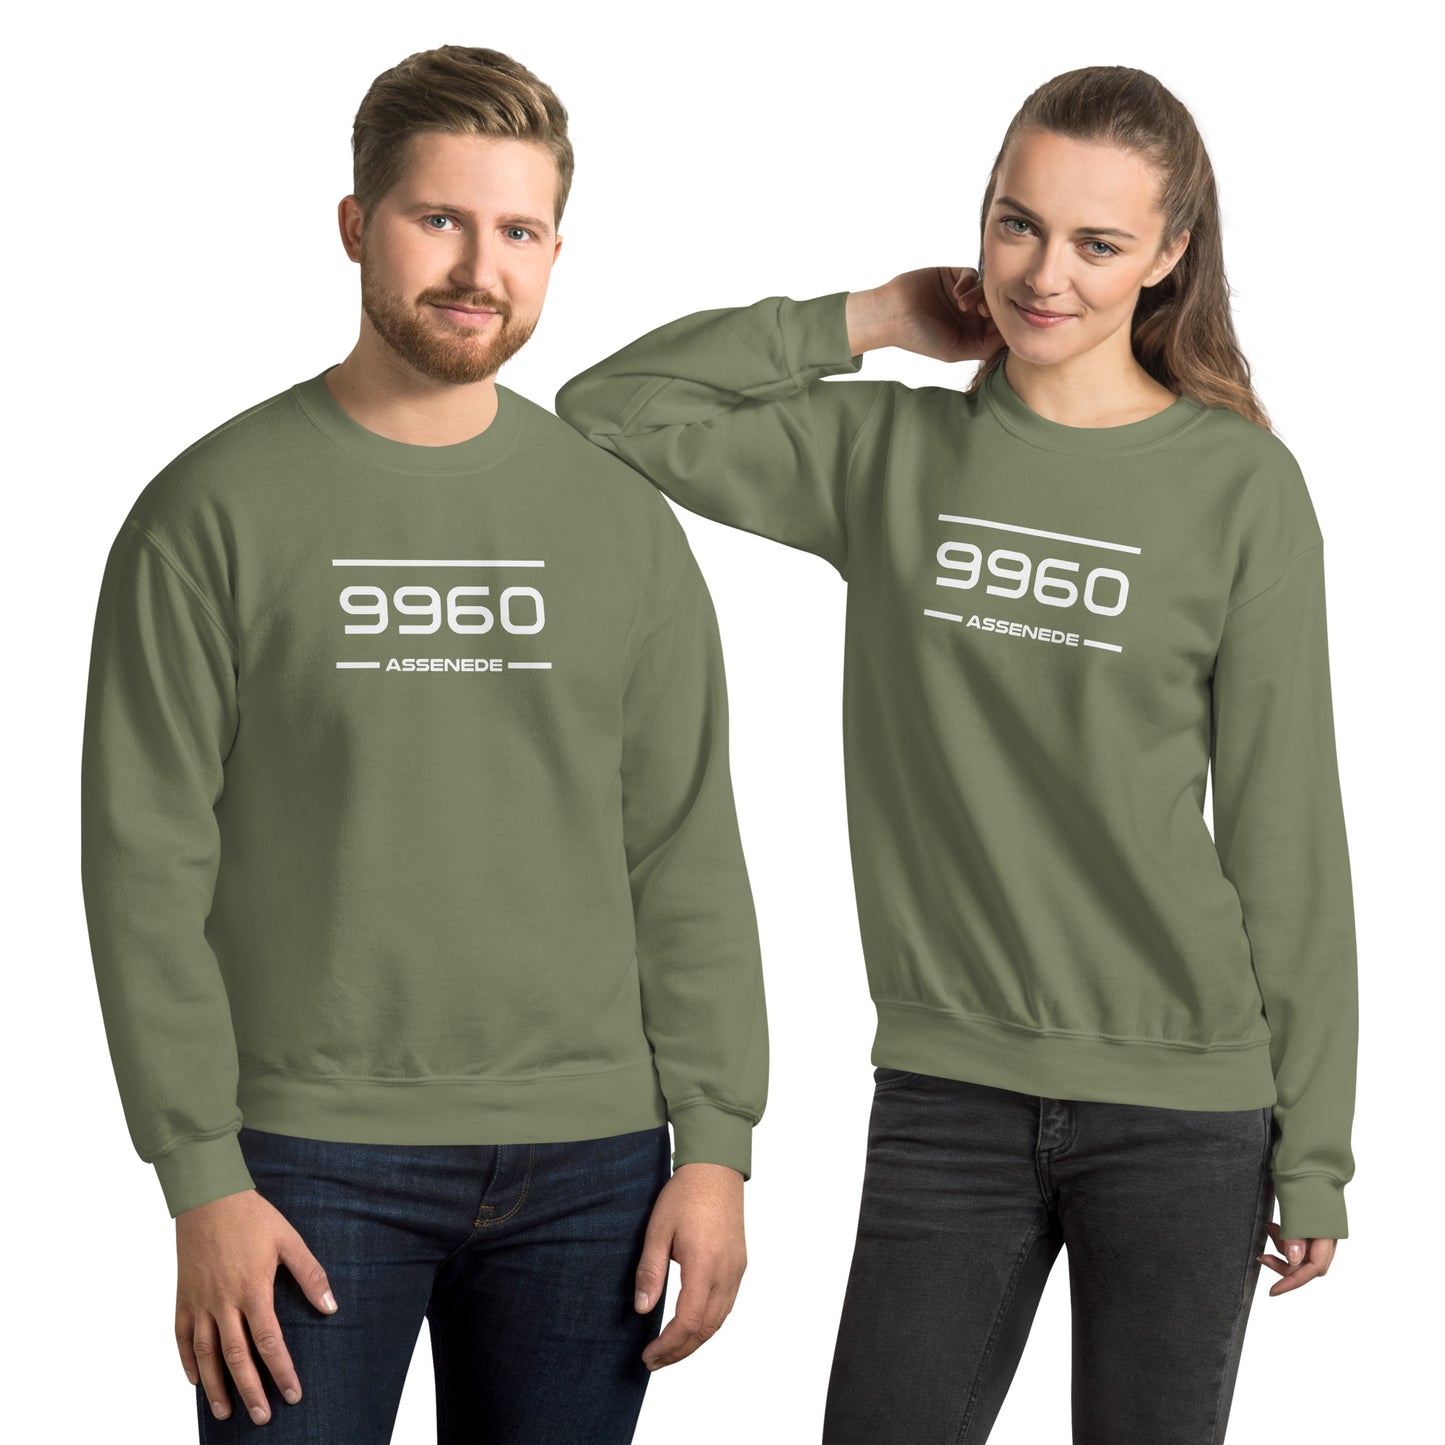 Sweater - 9960 - Assenede (M/V)